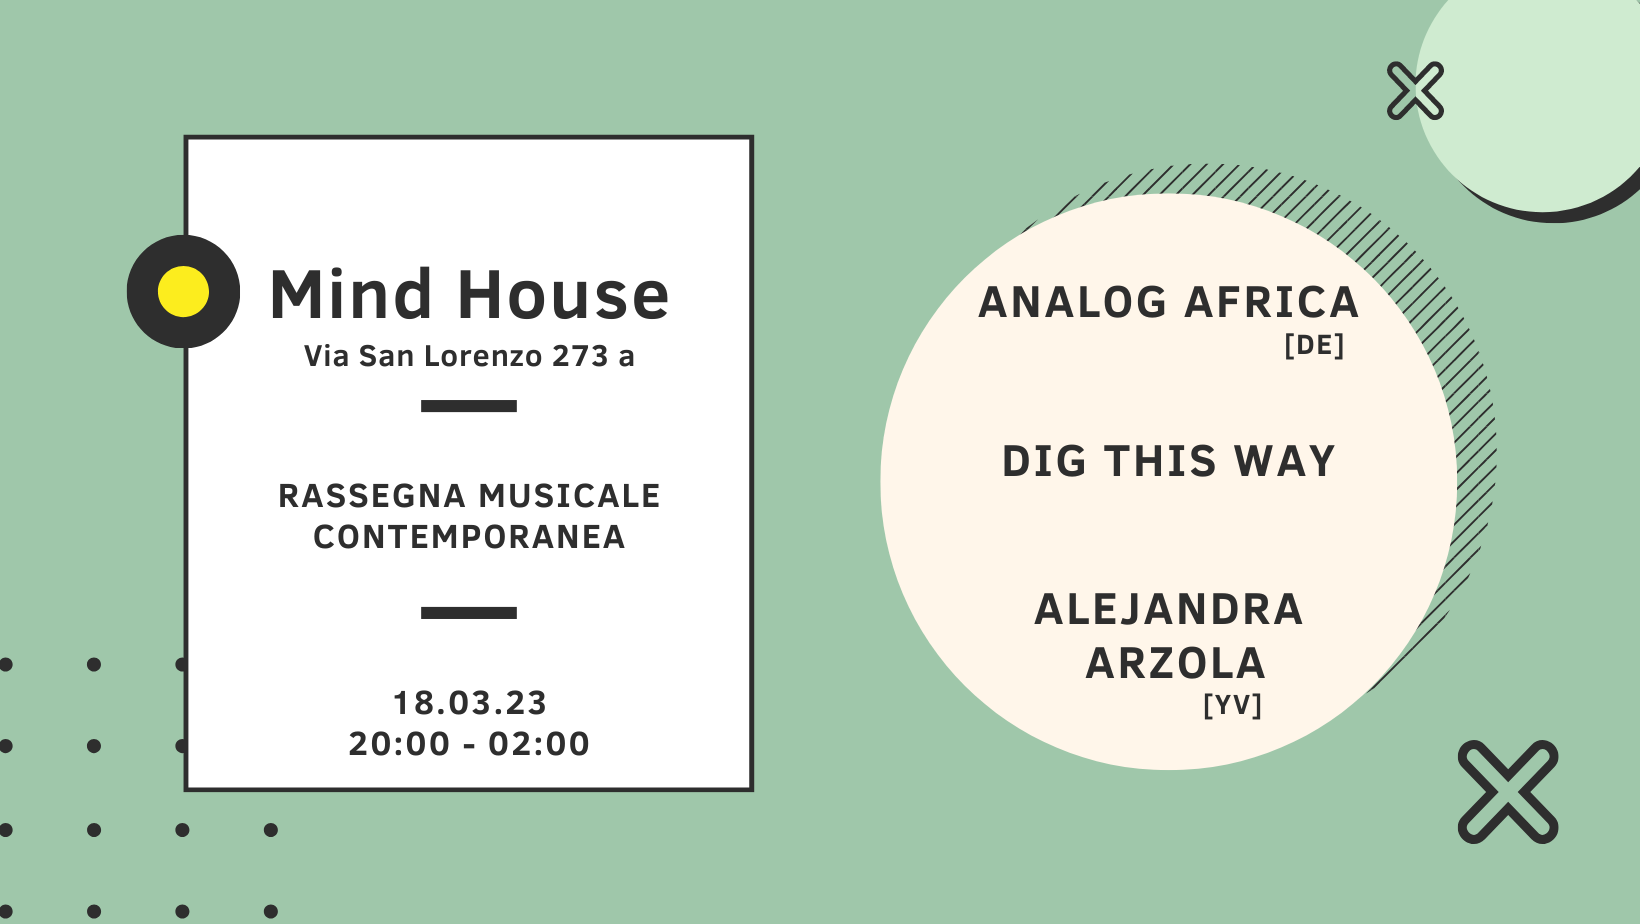 Nomad Music Festival w/Analog Africa, Dig this way, Alejandra Arzola